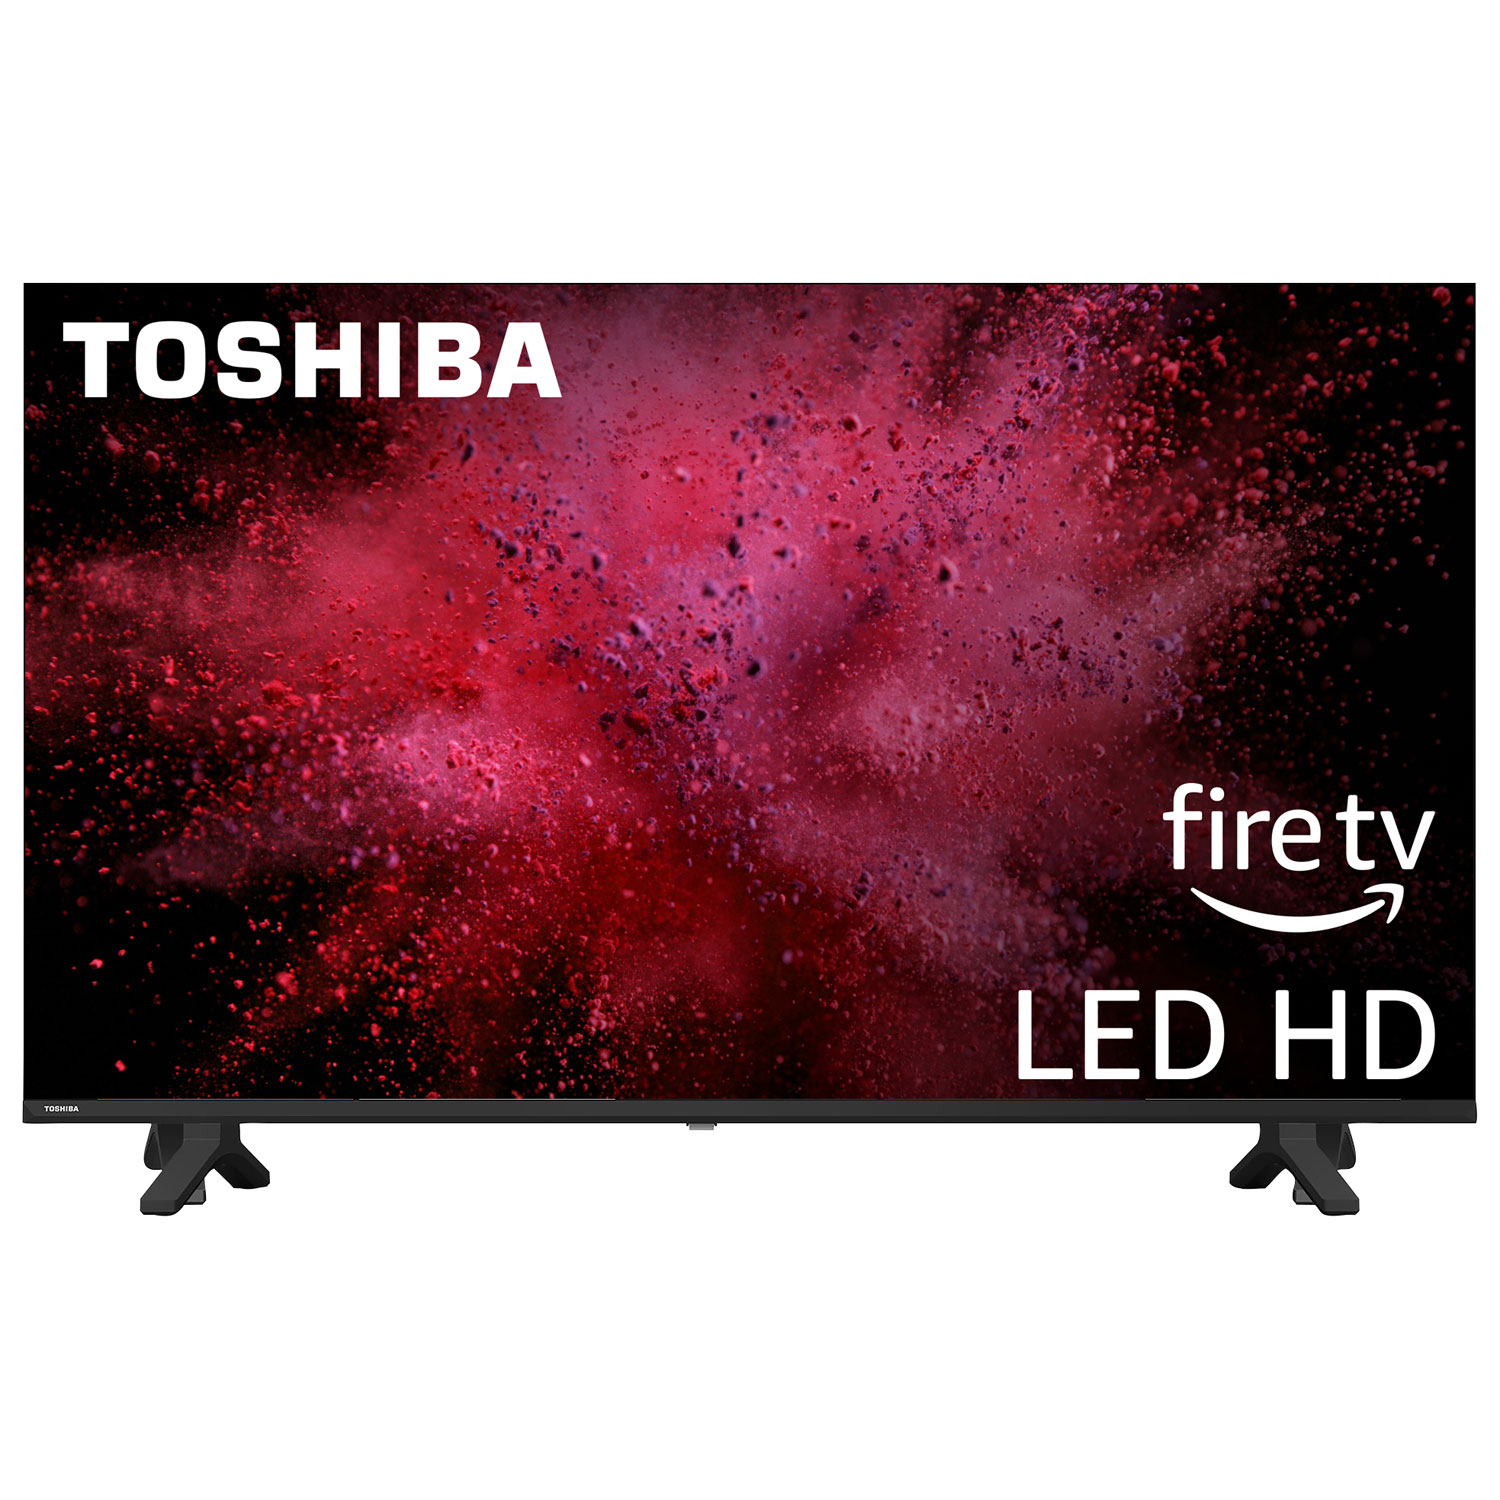 Toshiba 43" 1080p HD LED Smart TV (43V35C) - Fire TV Edition - 2021